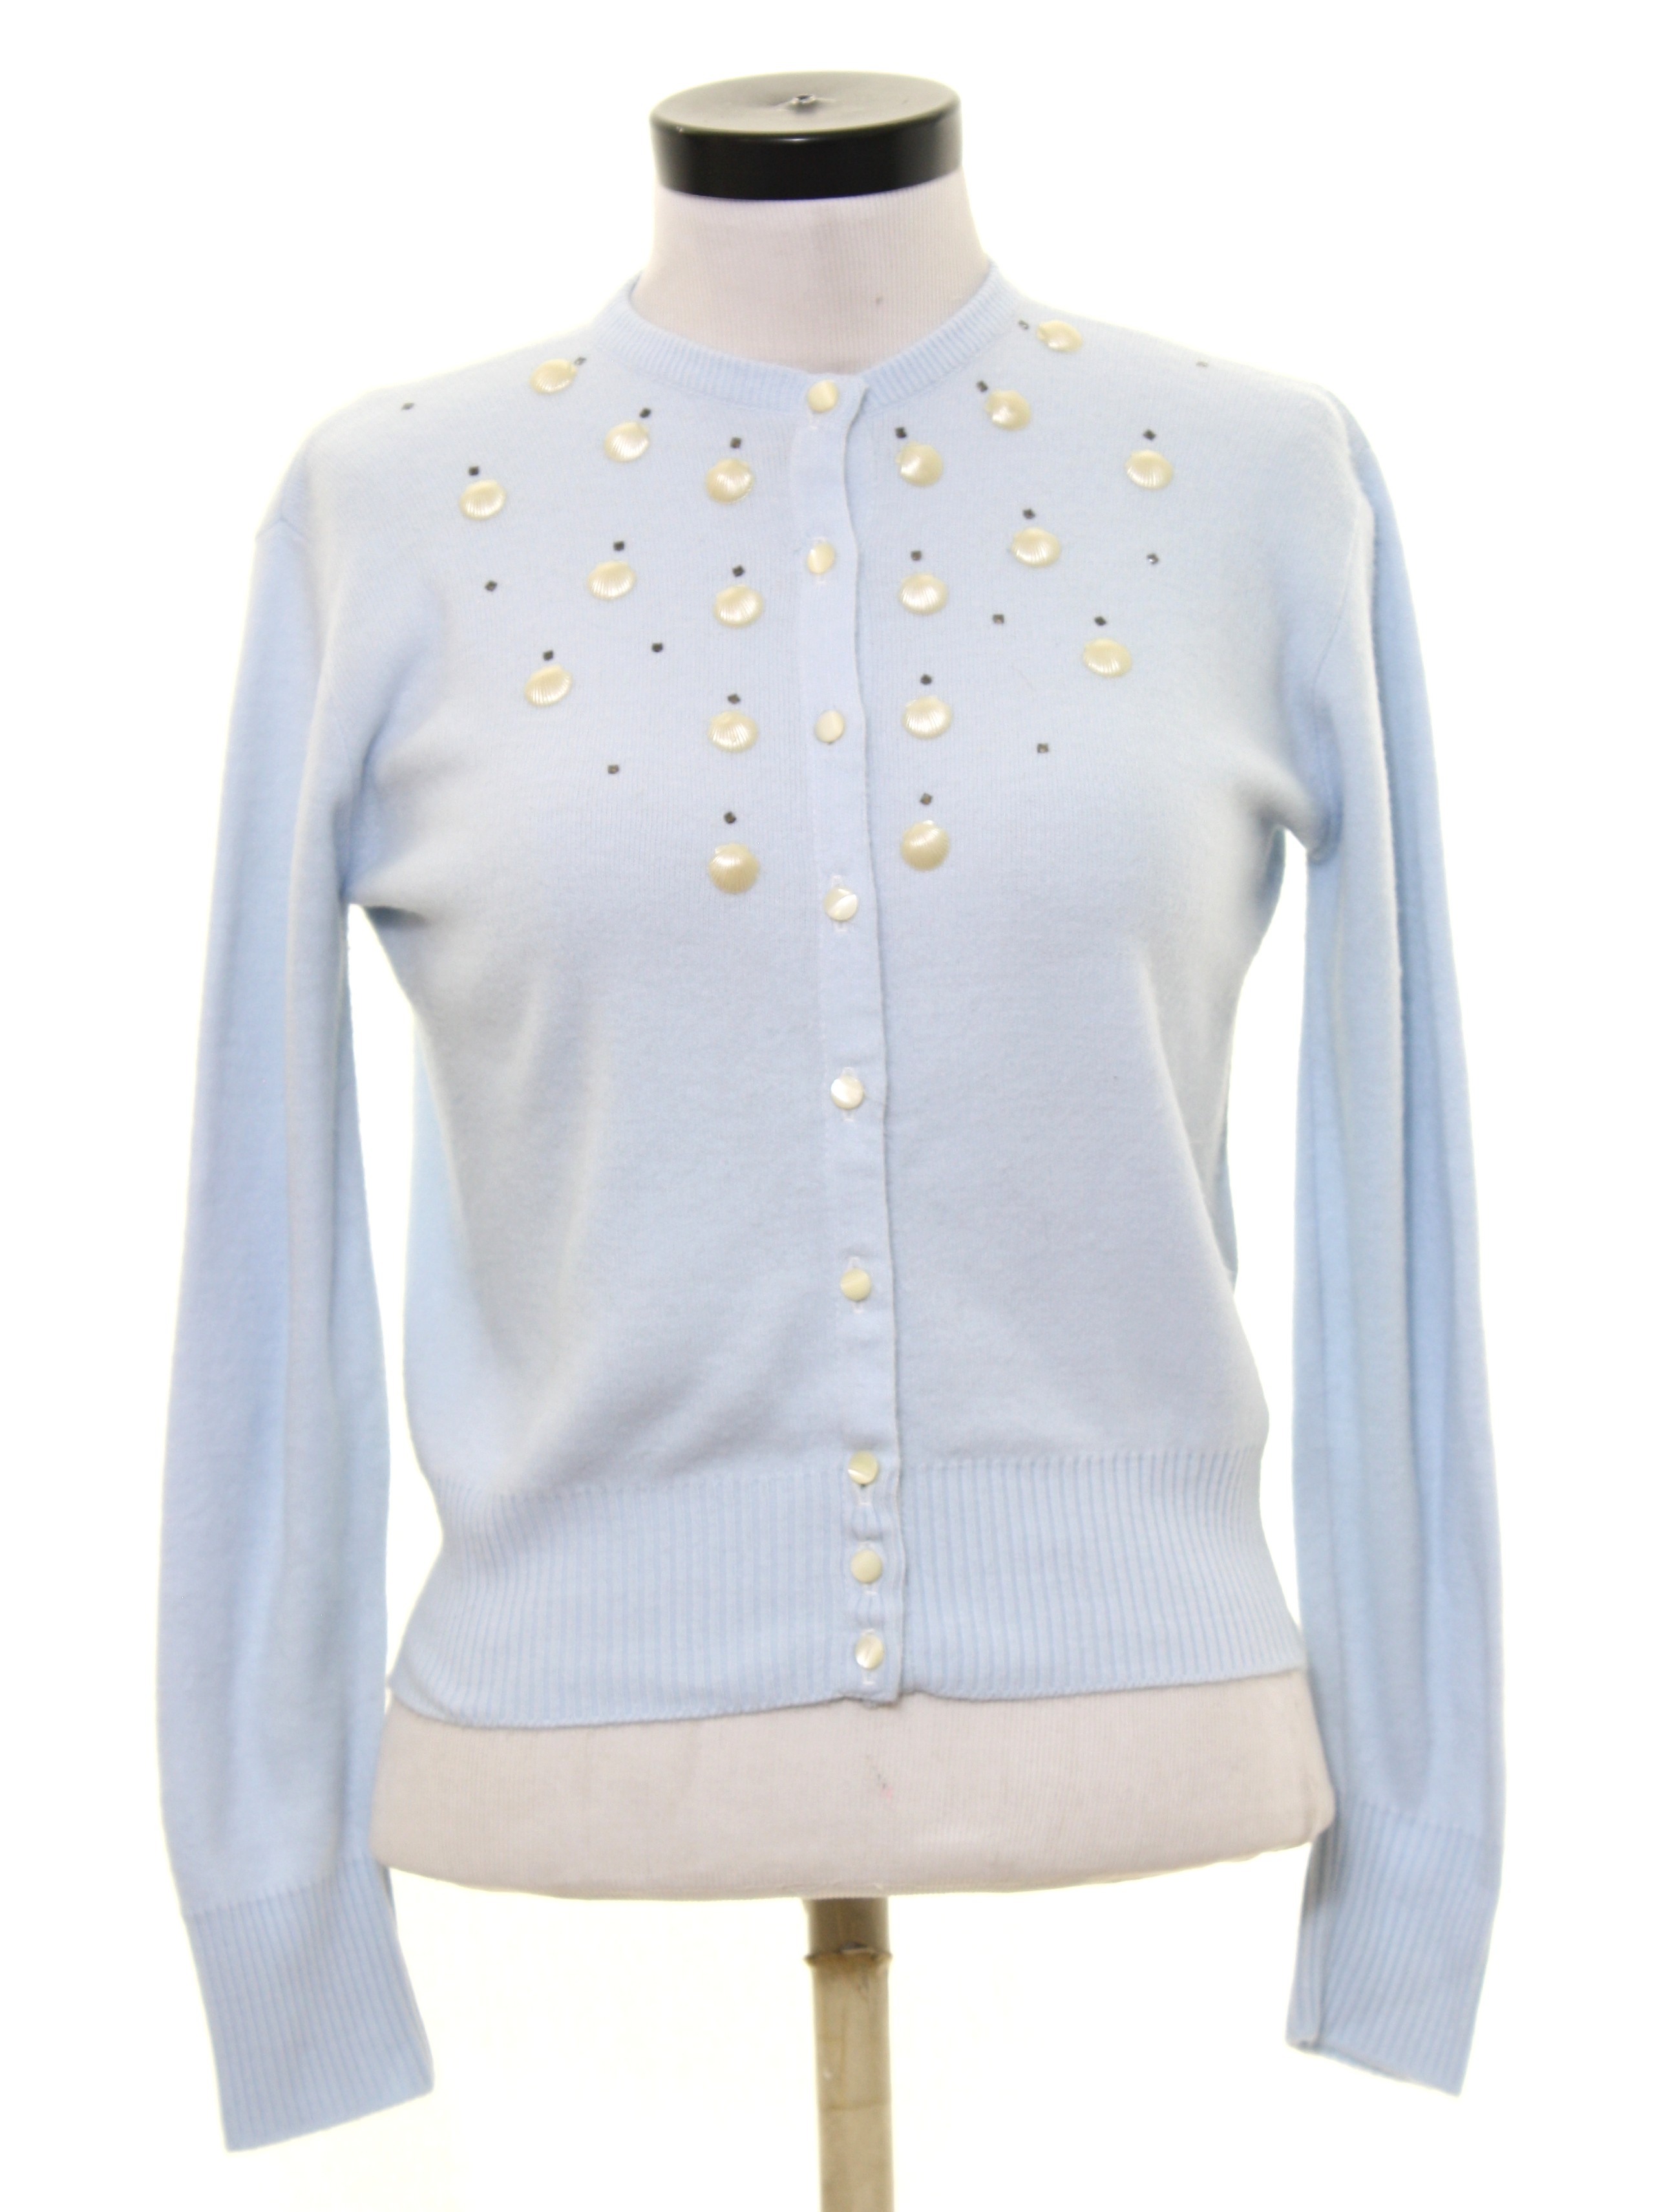 1950s Sweater: Late 50s -No Label- Womens pale blue orlon acrylic knit ...